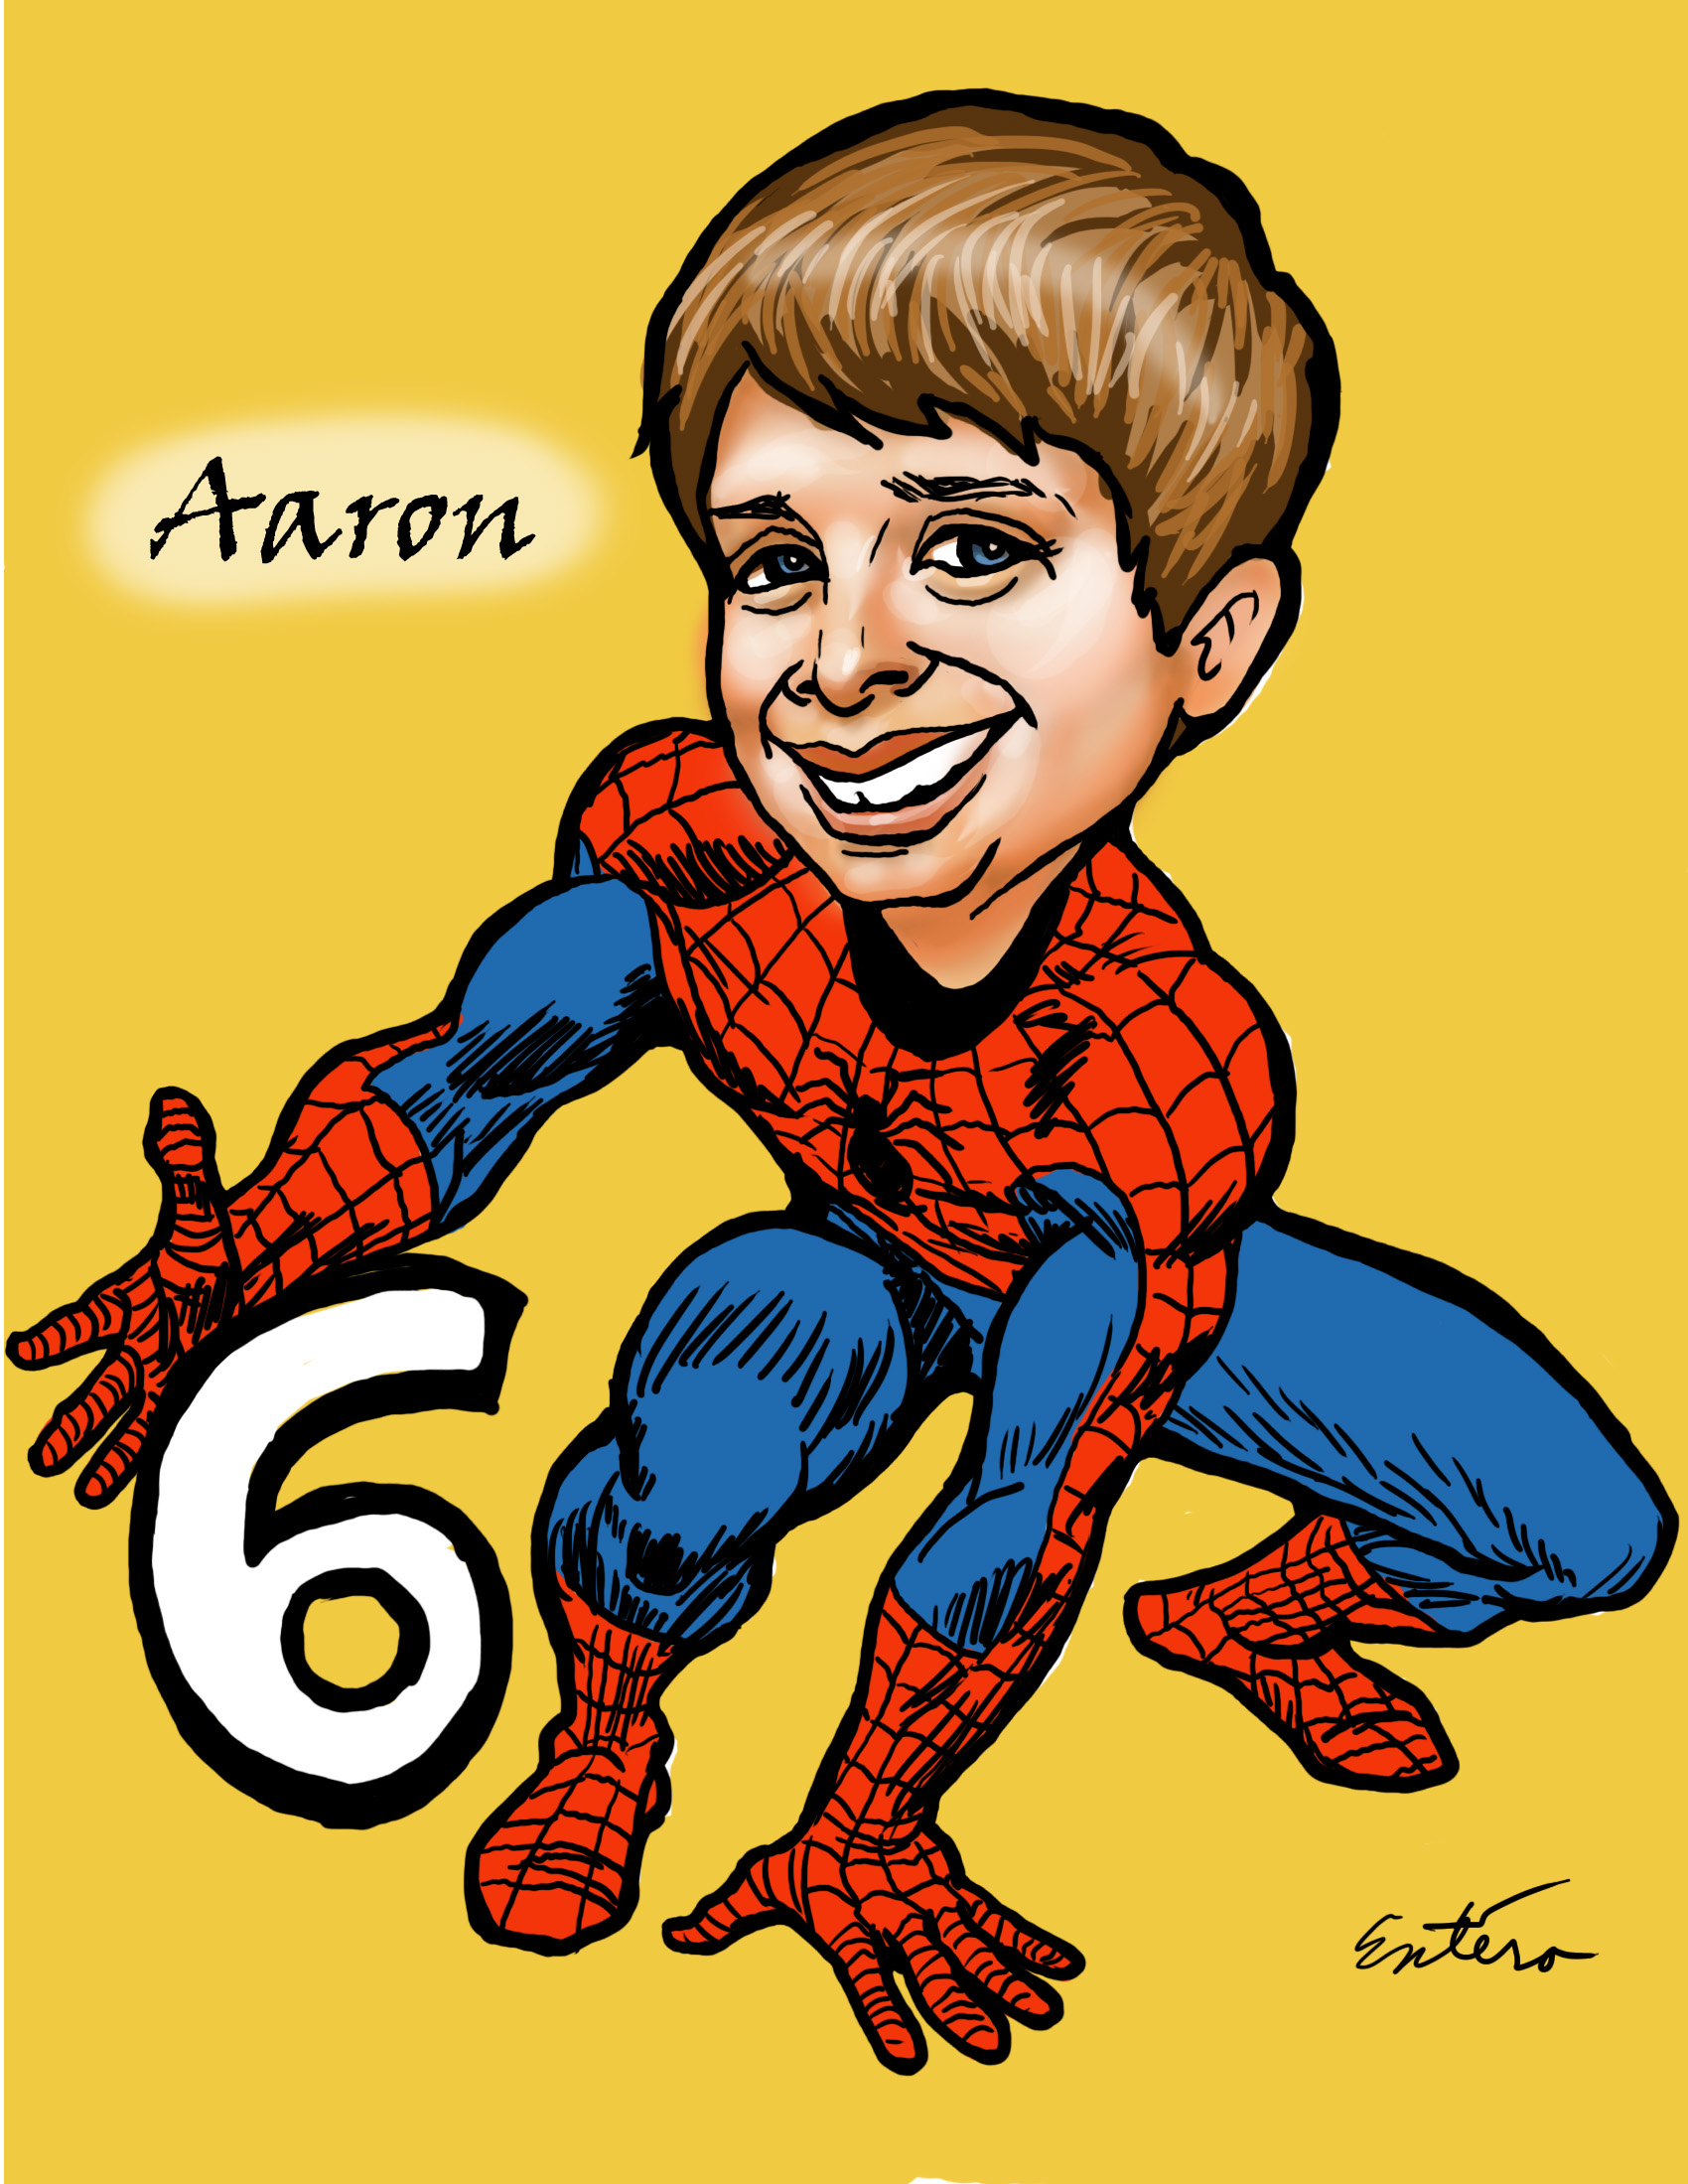 Aaron Spiderman.jpg